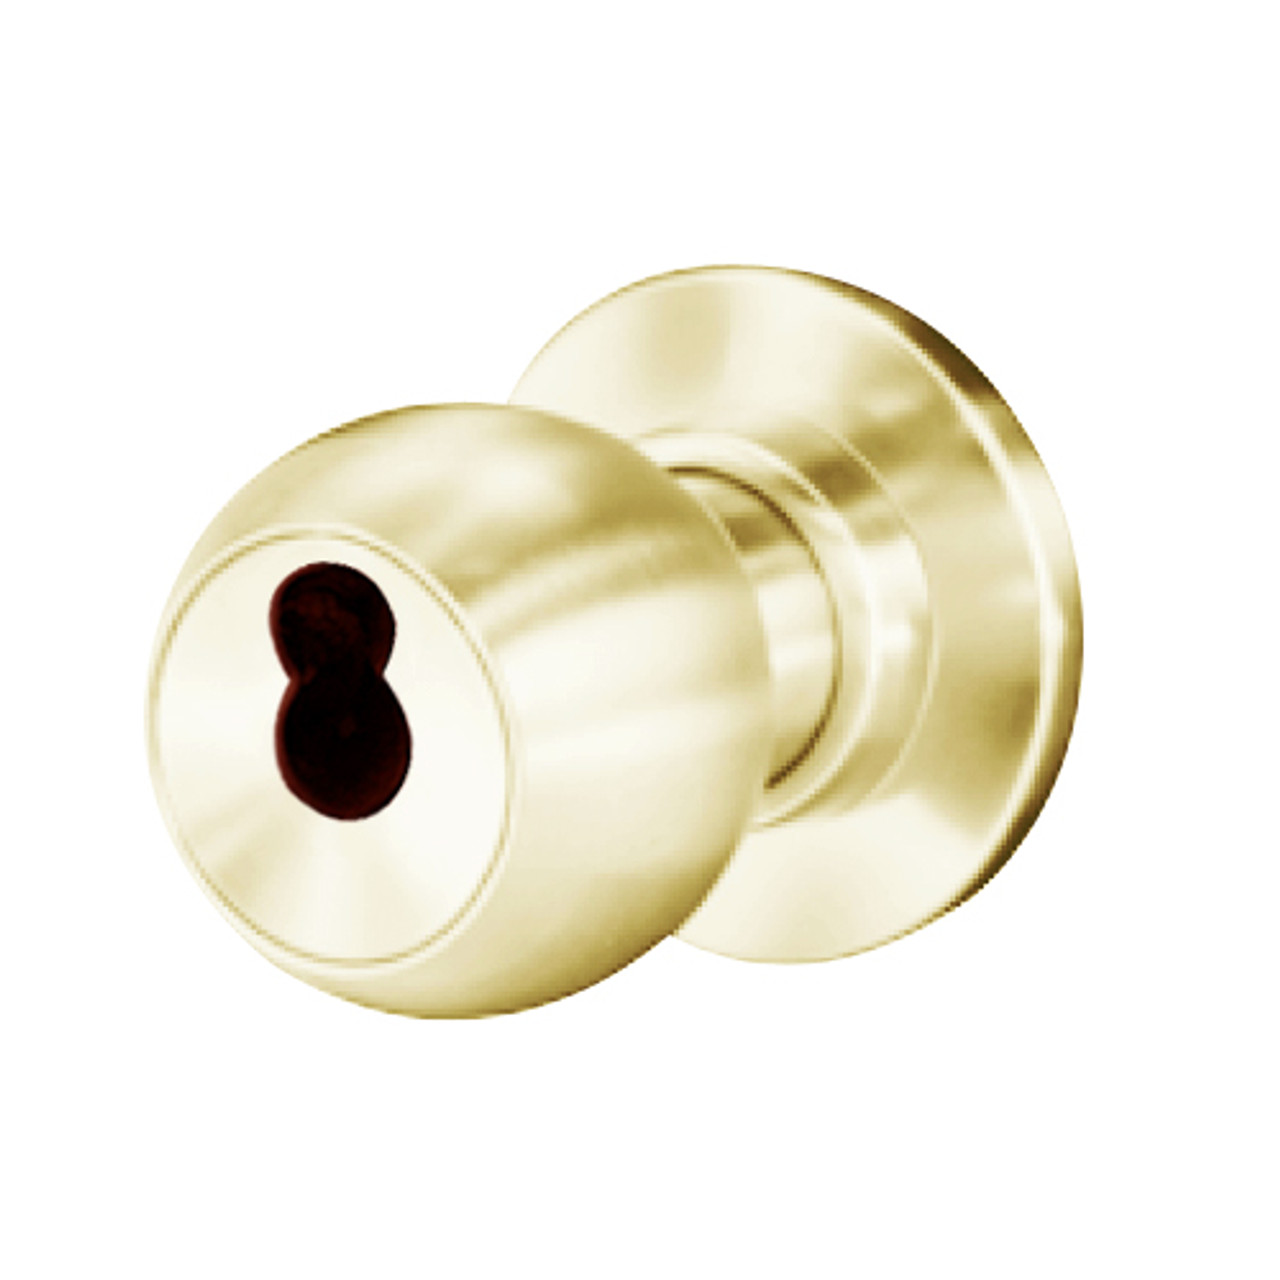 8K57YD4CS3605 Best 8K Series Exit Heavy Duty Cylindrical Knob Locks with Round Style in Bright Brass